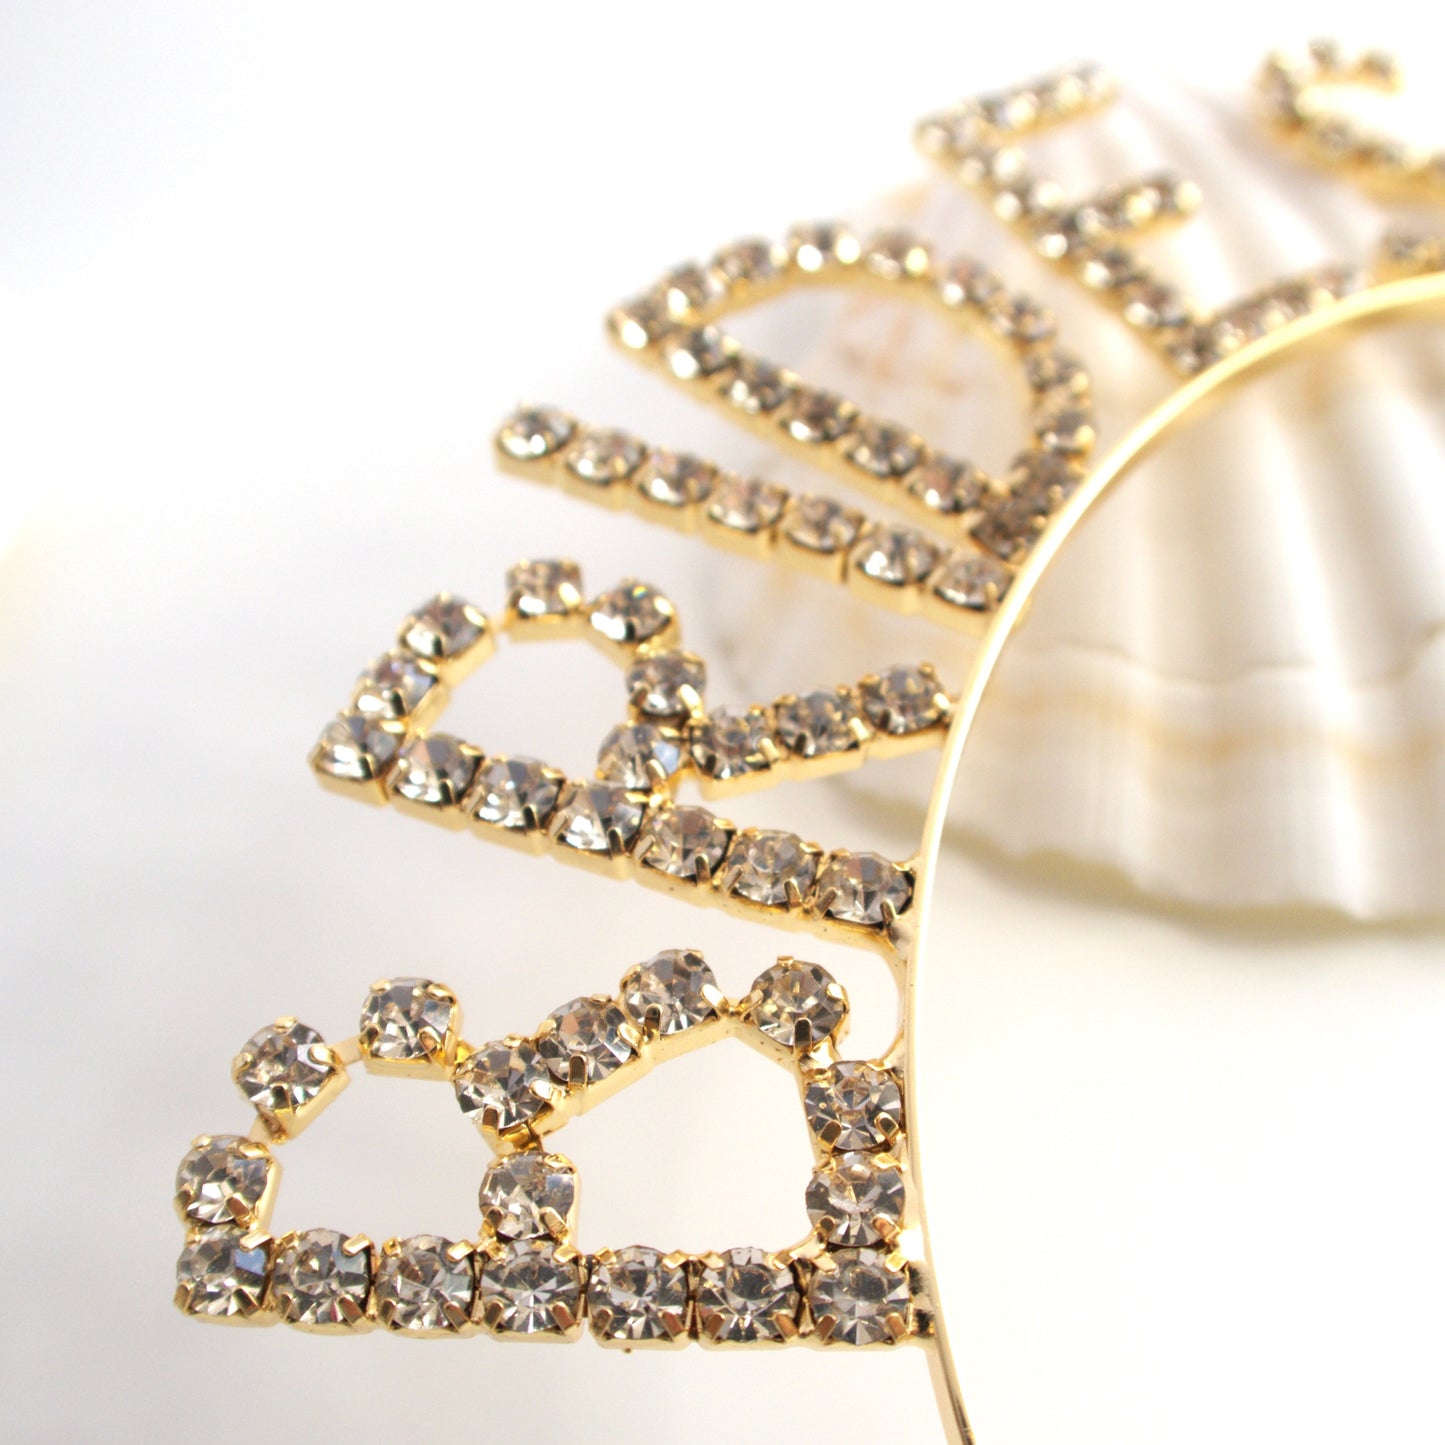 Bridesmaid headband in gold, diamante design